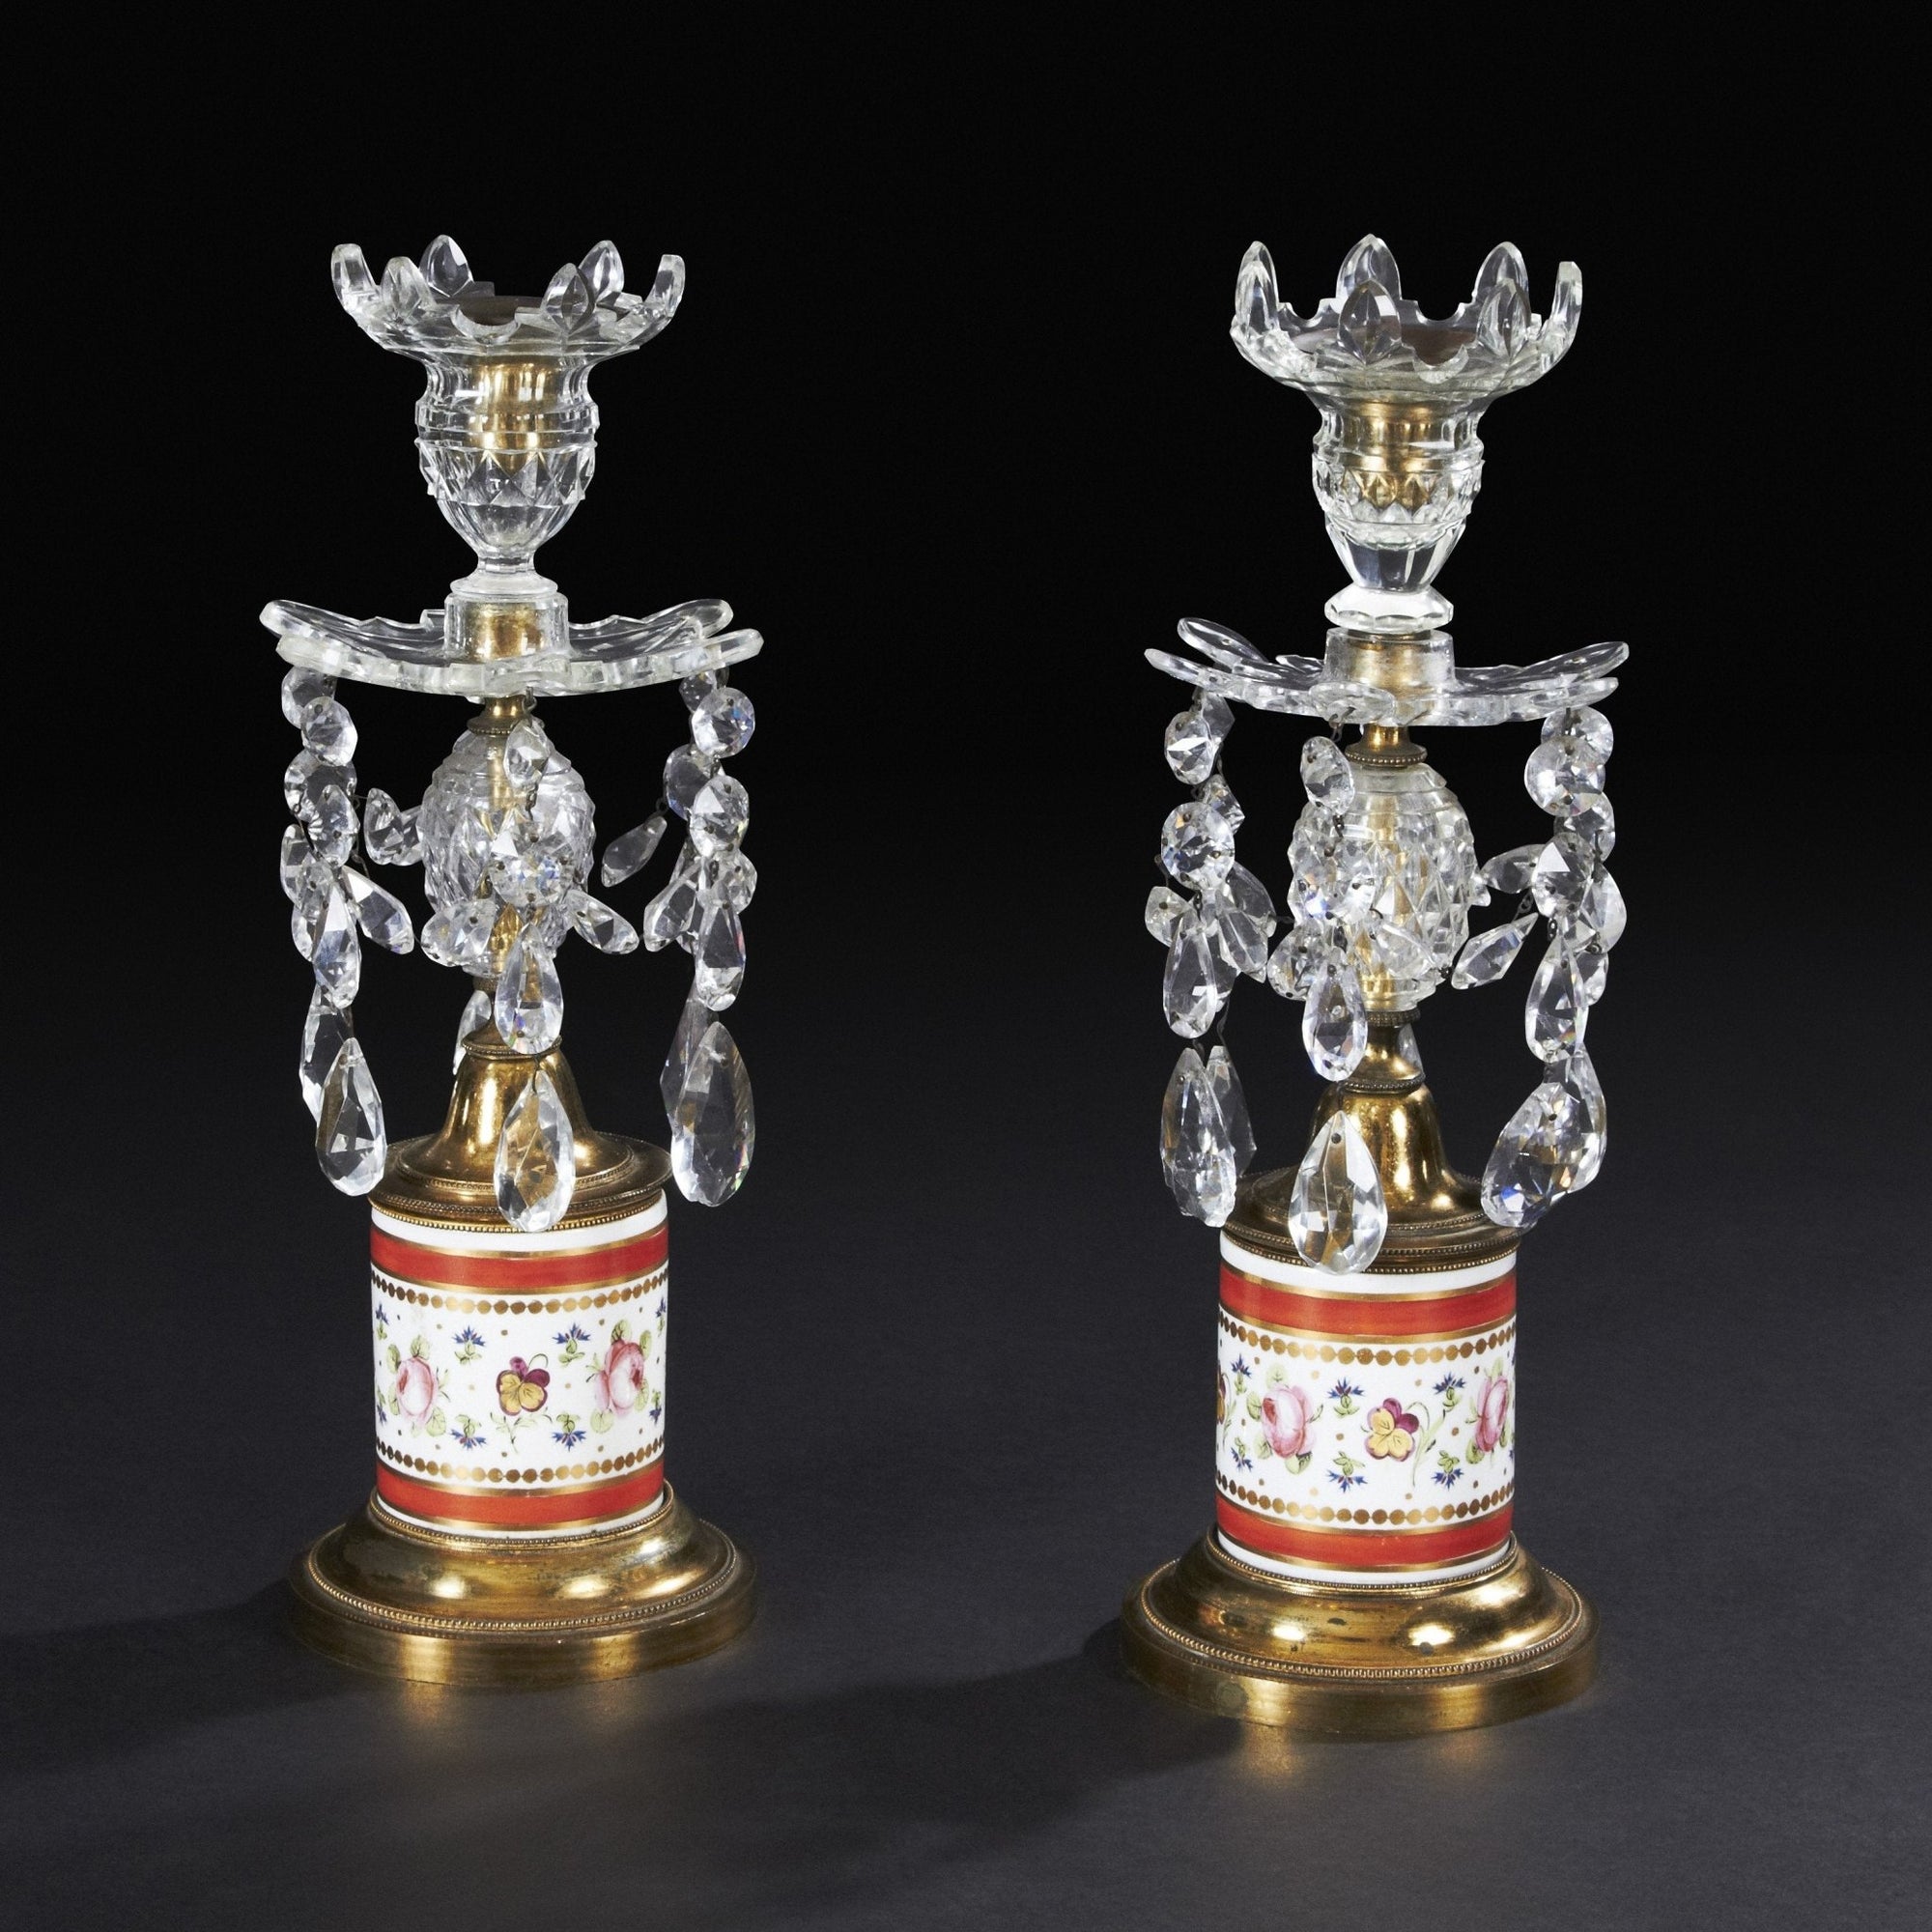 Pair of Regency Ormolu Mounted Cut Glass Candlesticks - English Georgian America